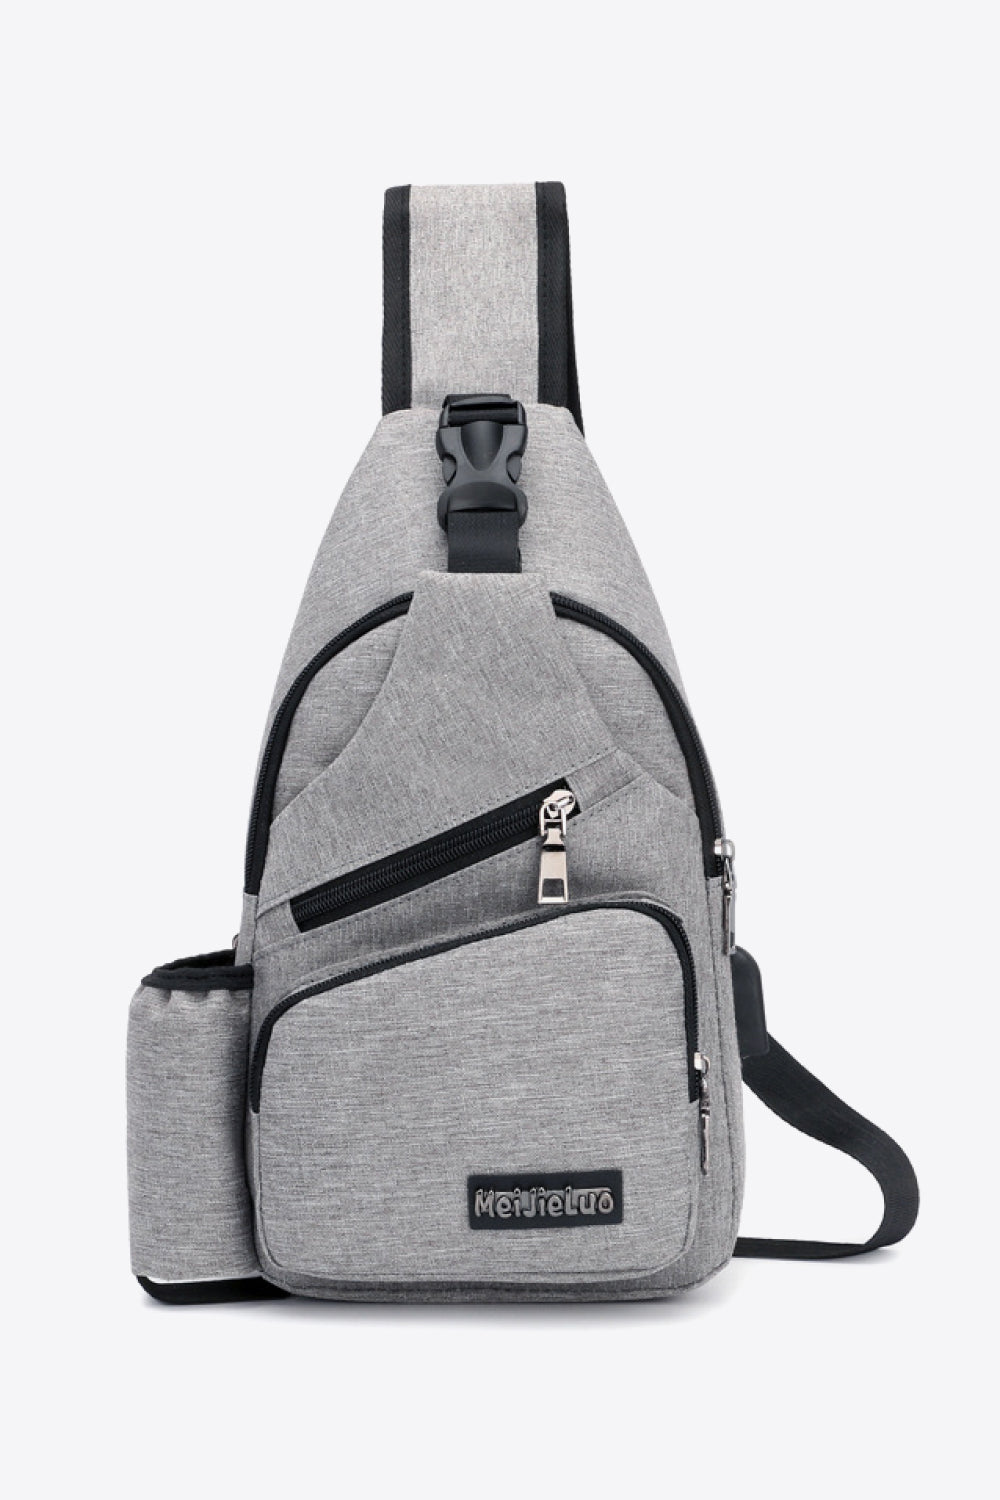 buckle-oxford-sling-bag